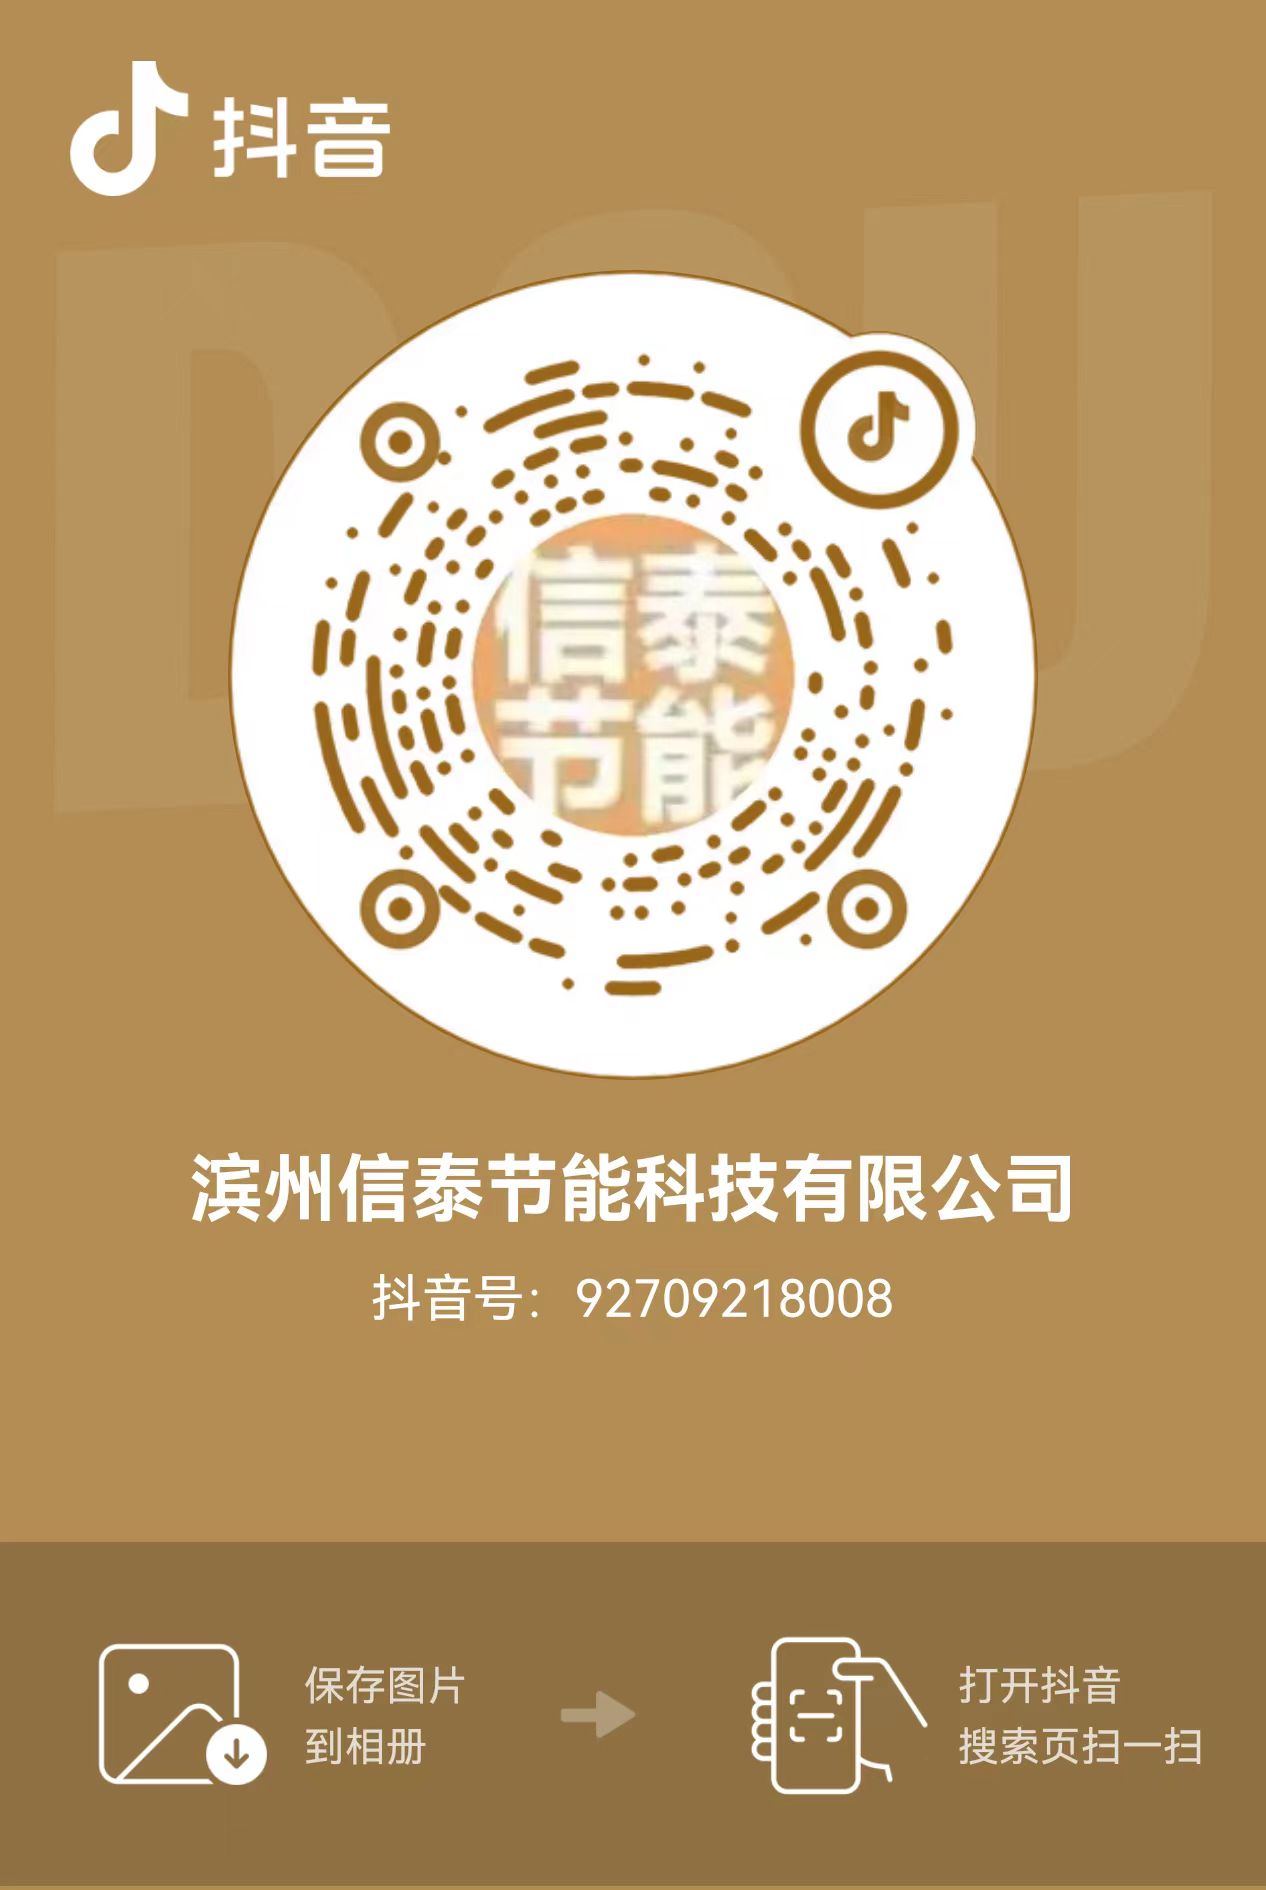 Binzhou XINTAI energy-saving technology co.,ltd. has opened China douyin and kuaishou account